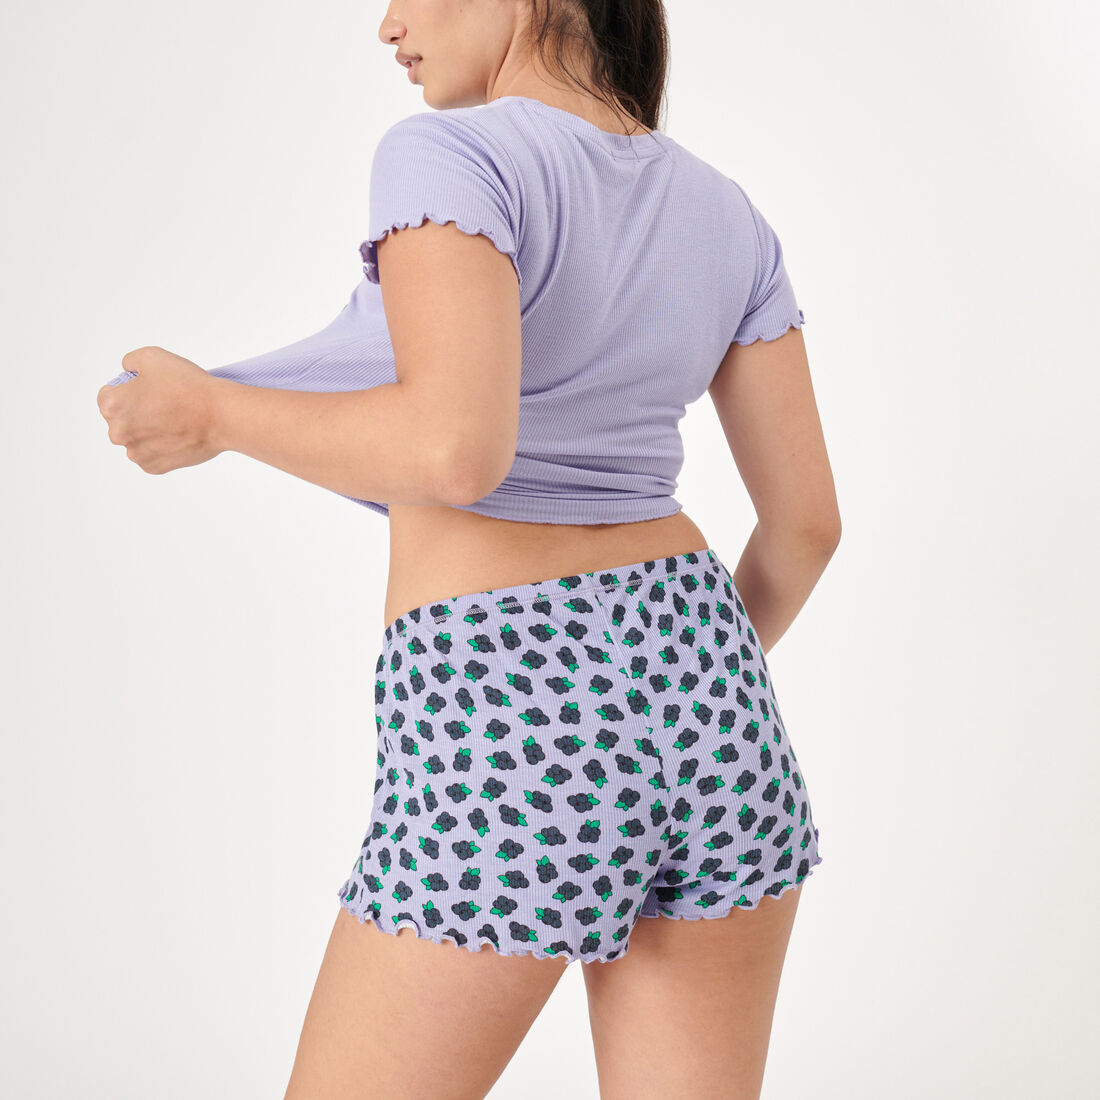 blueberry patterned shorts;